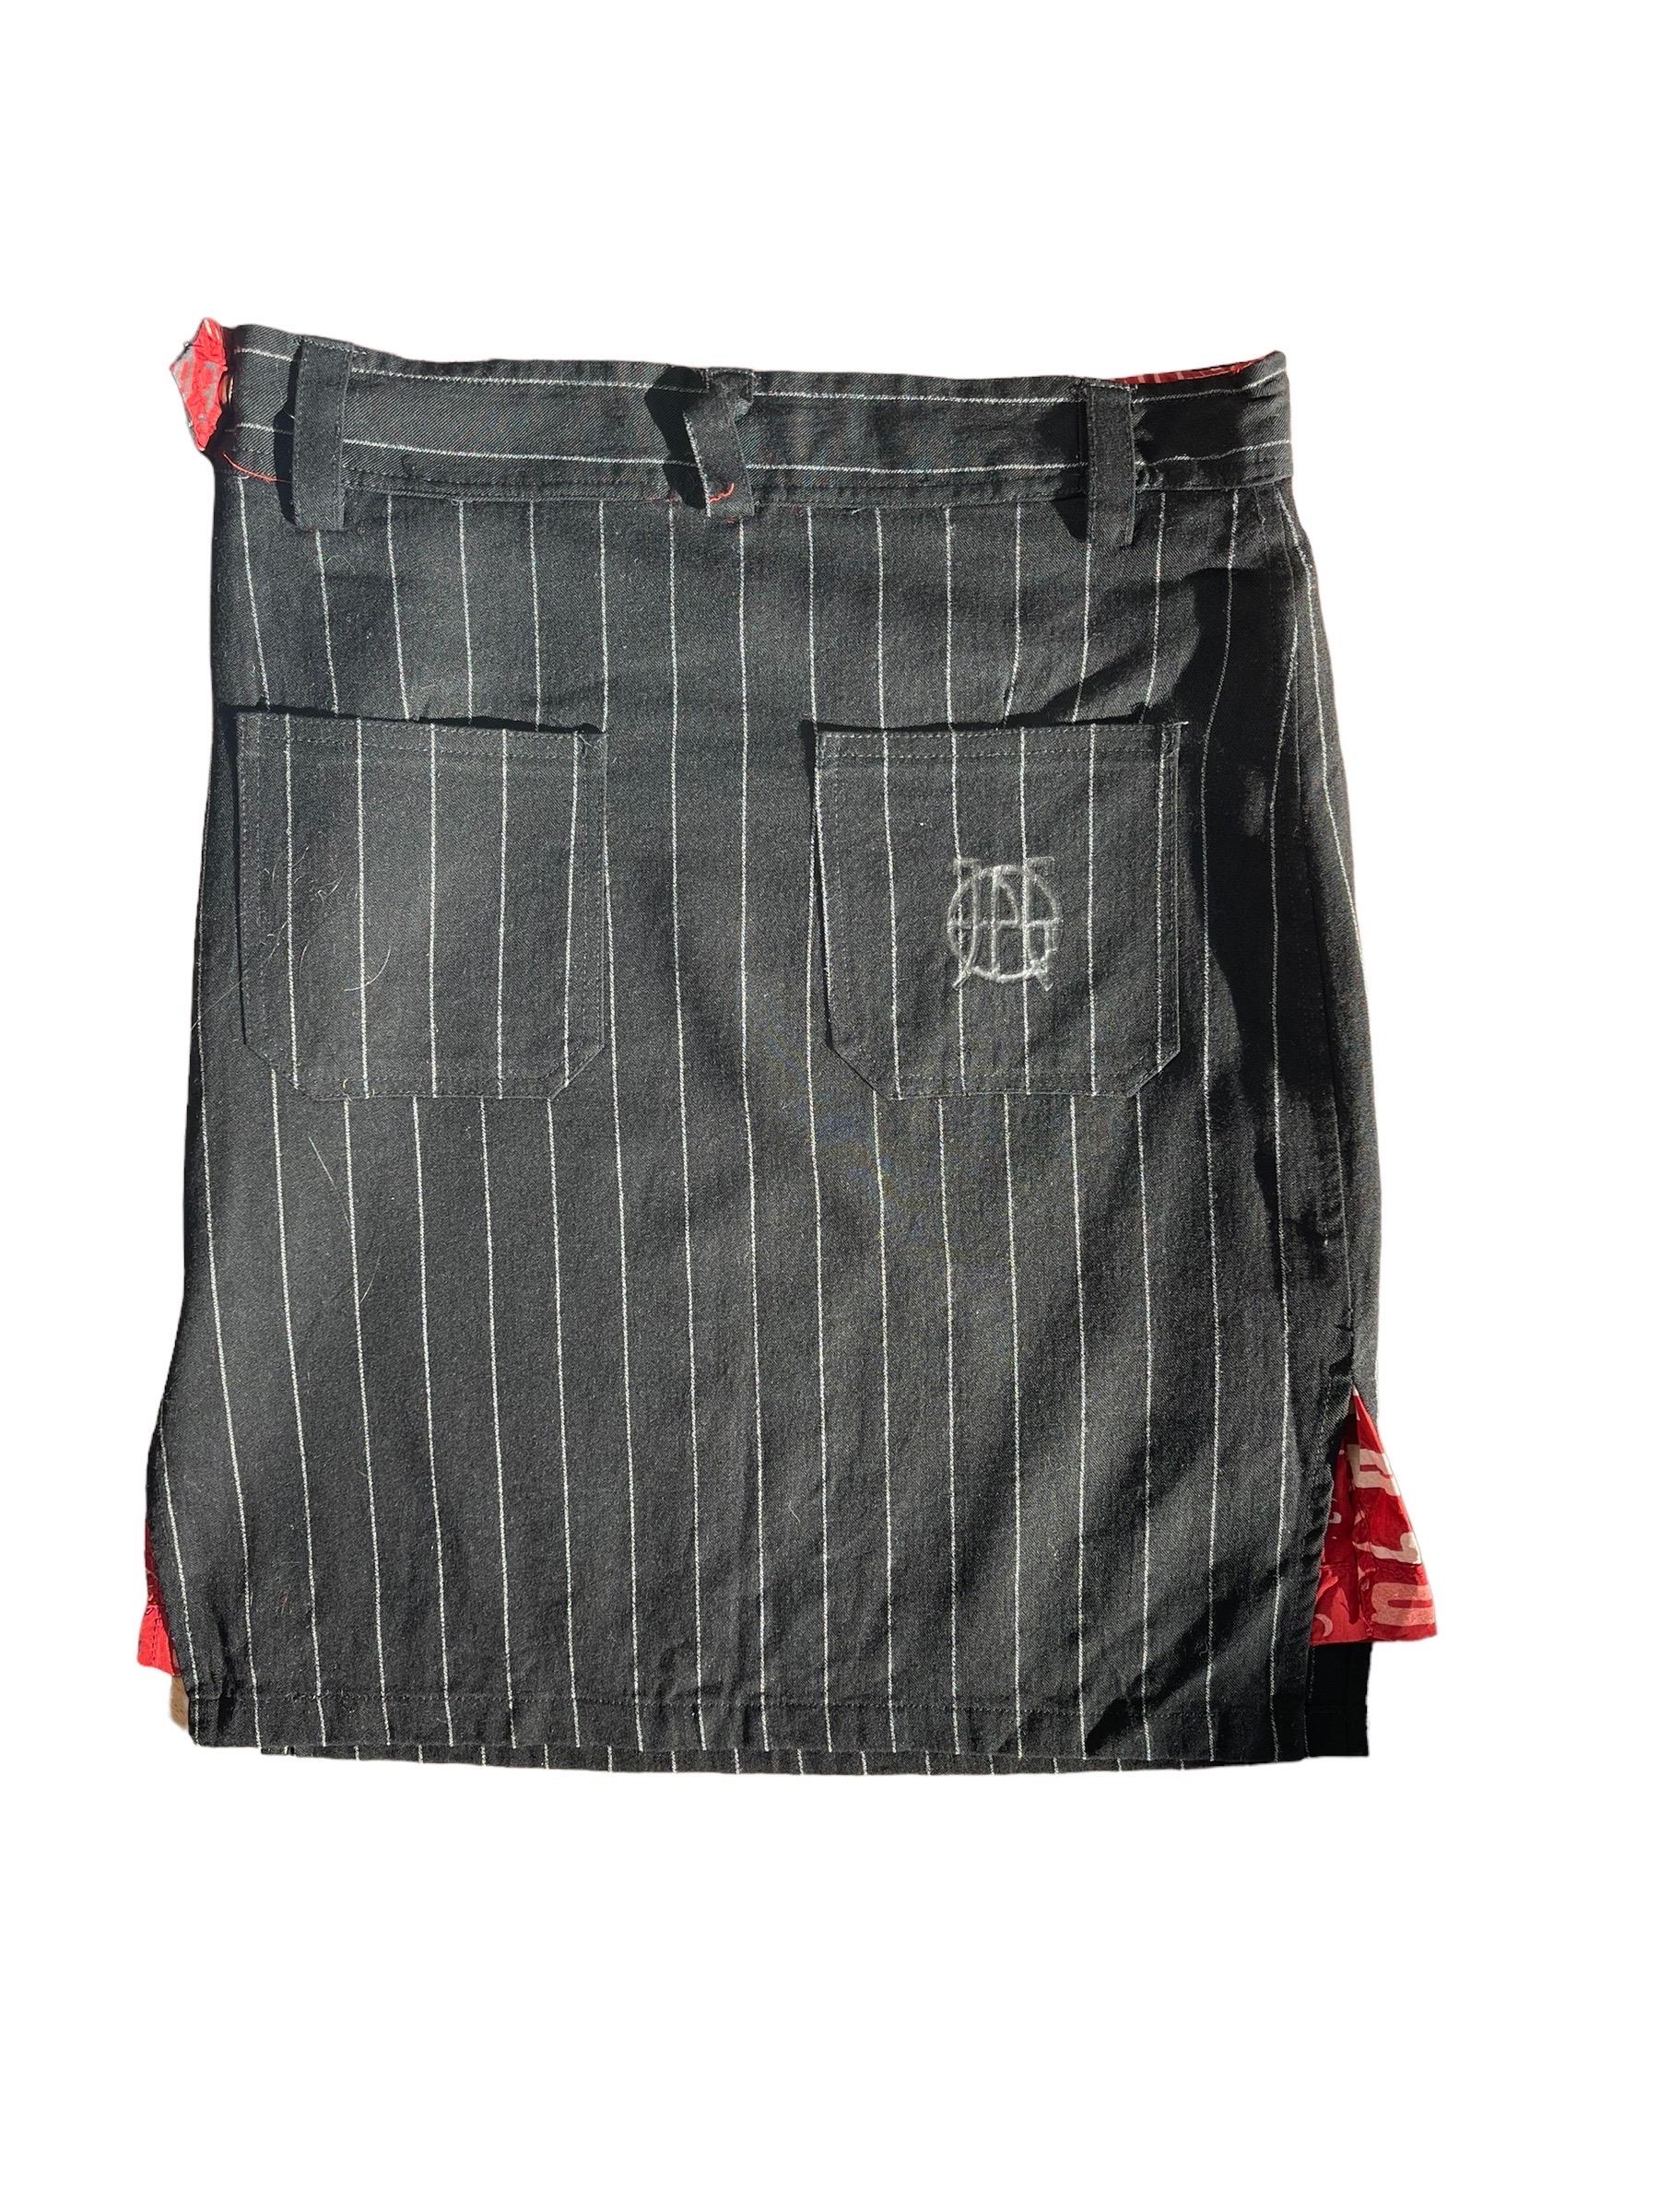 Black Jean Paul Gaultier Vintage Pinstripe Mini Skirt XS For Sale